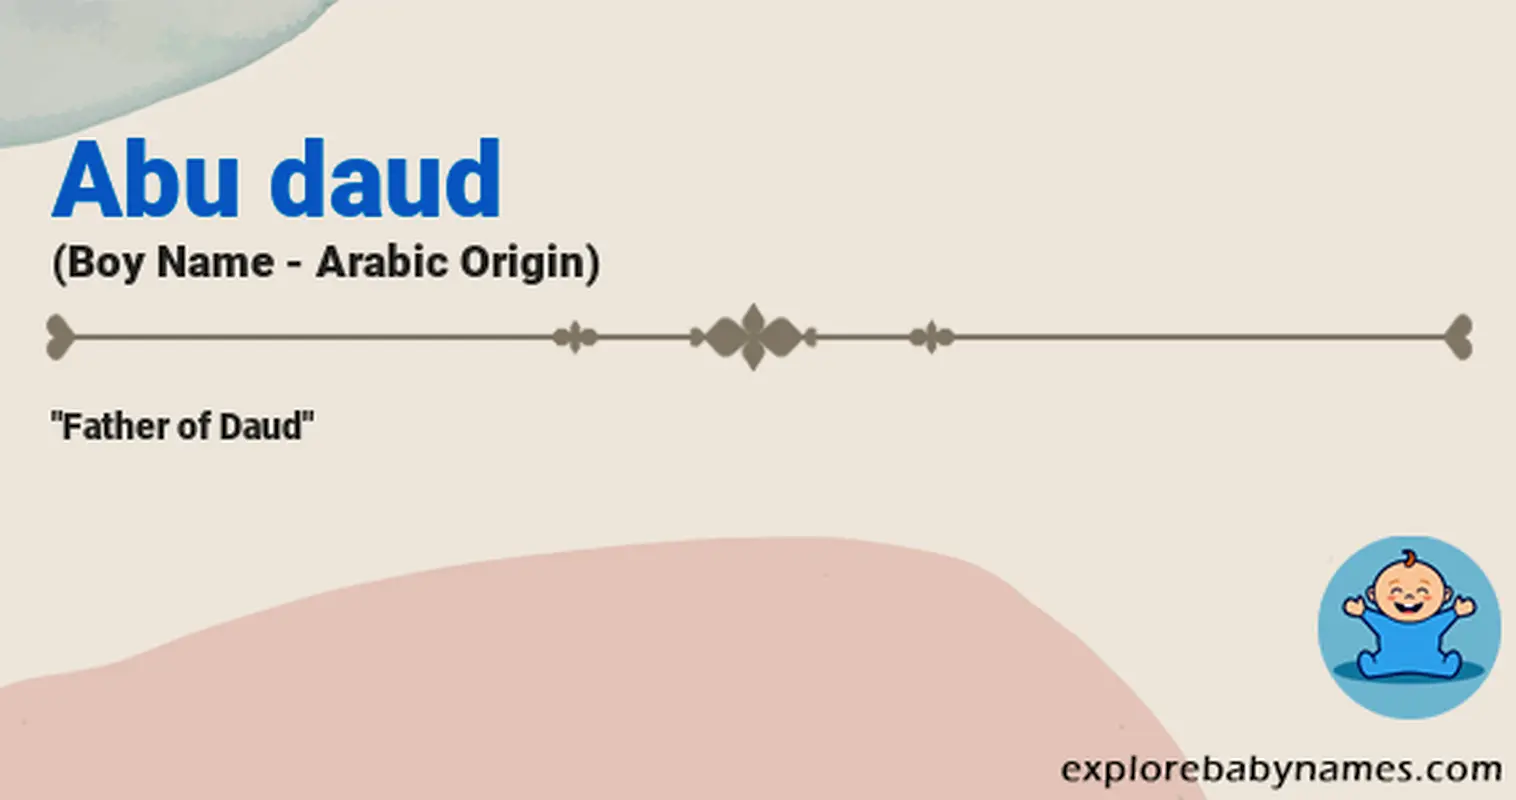 Meaning of Abu daud